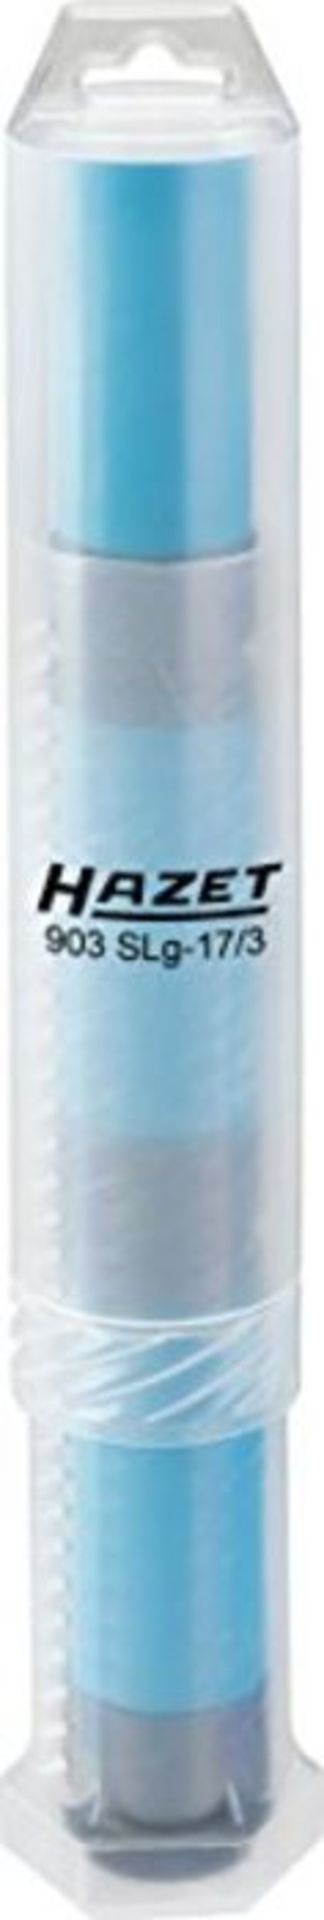 HAZET 903SLG-17/3 85 mm 6-Point Hexagon Traction Profile Impact Socket - Phosphatised/